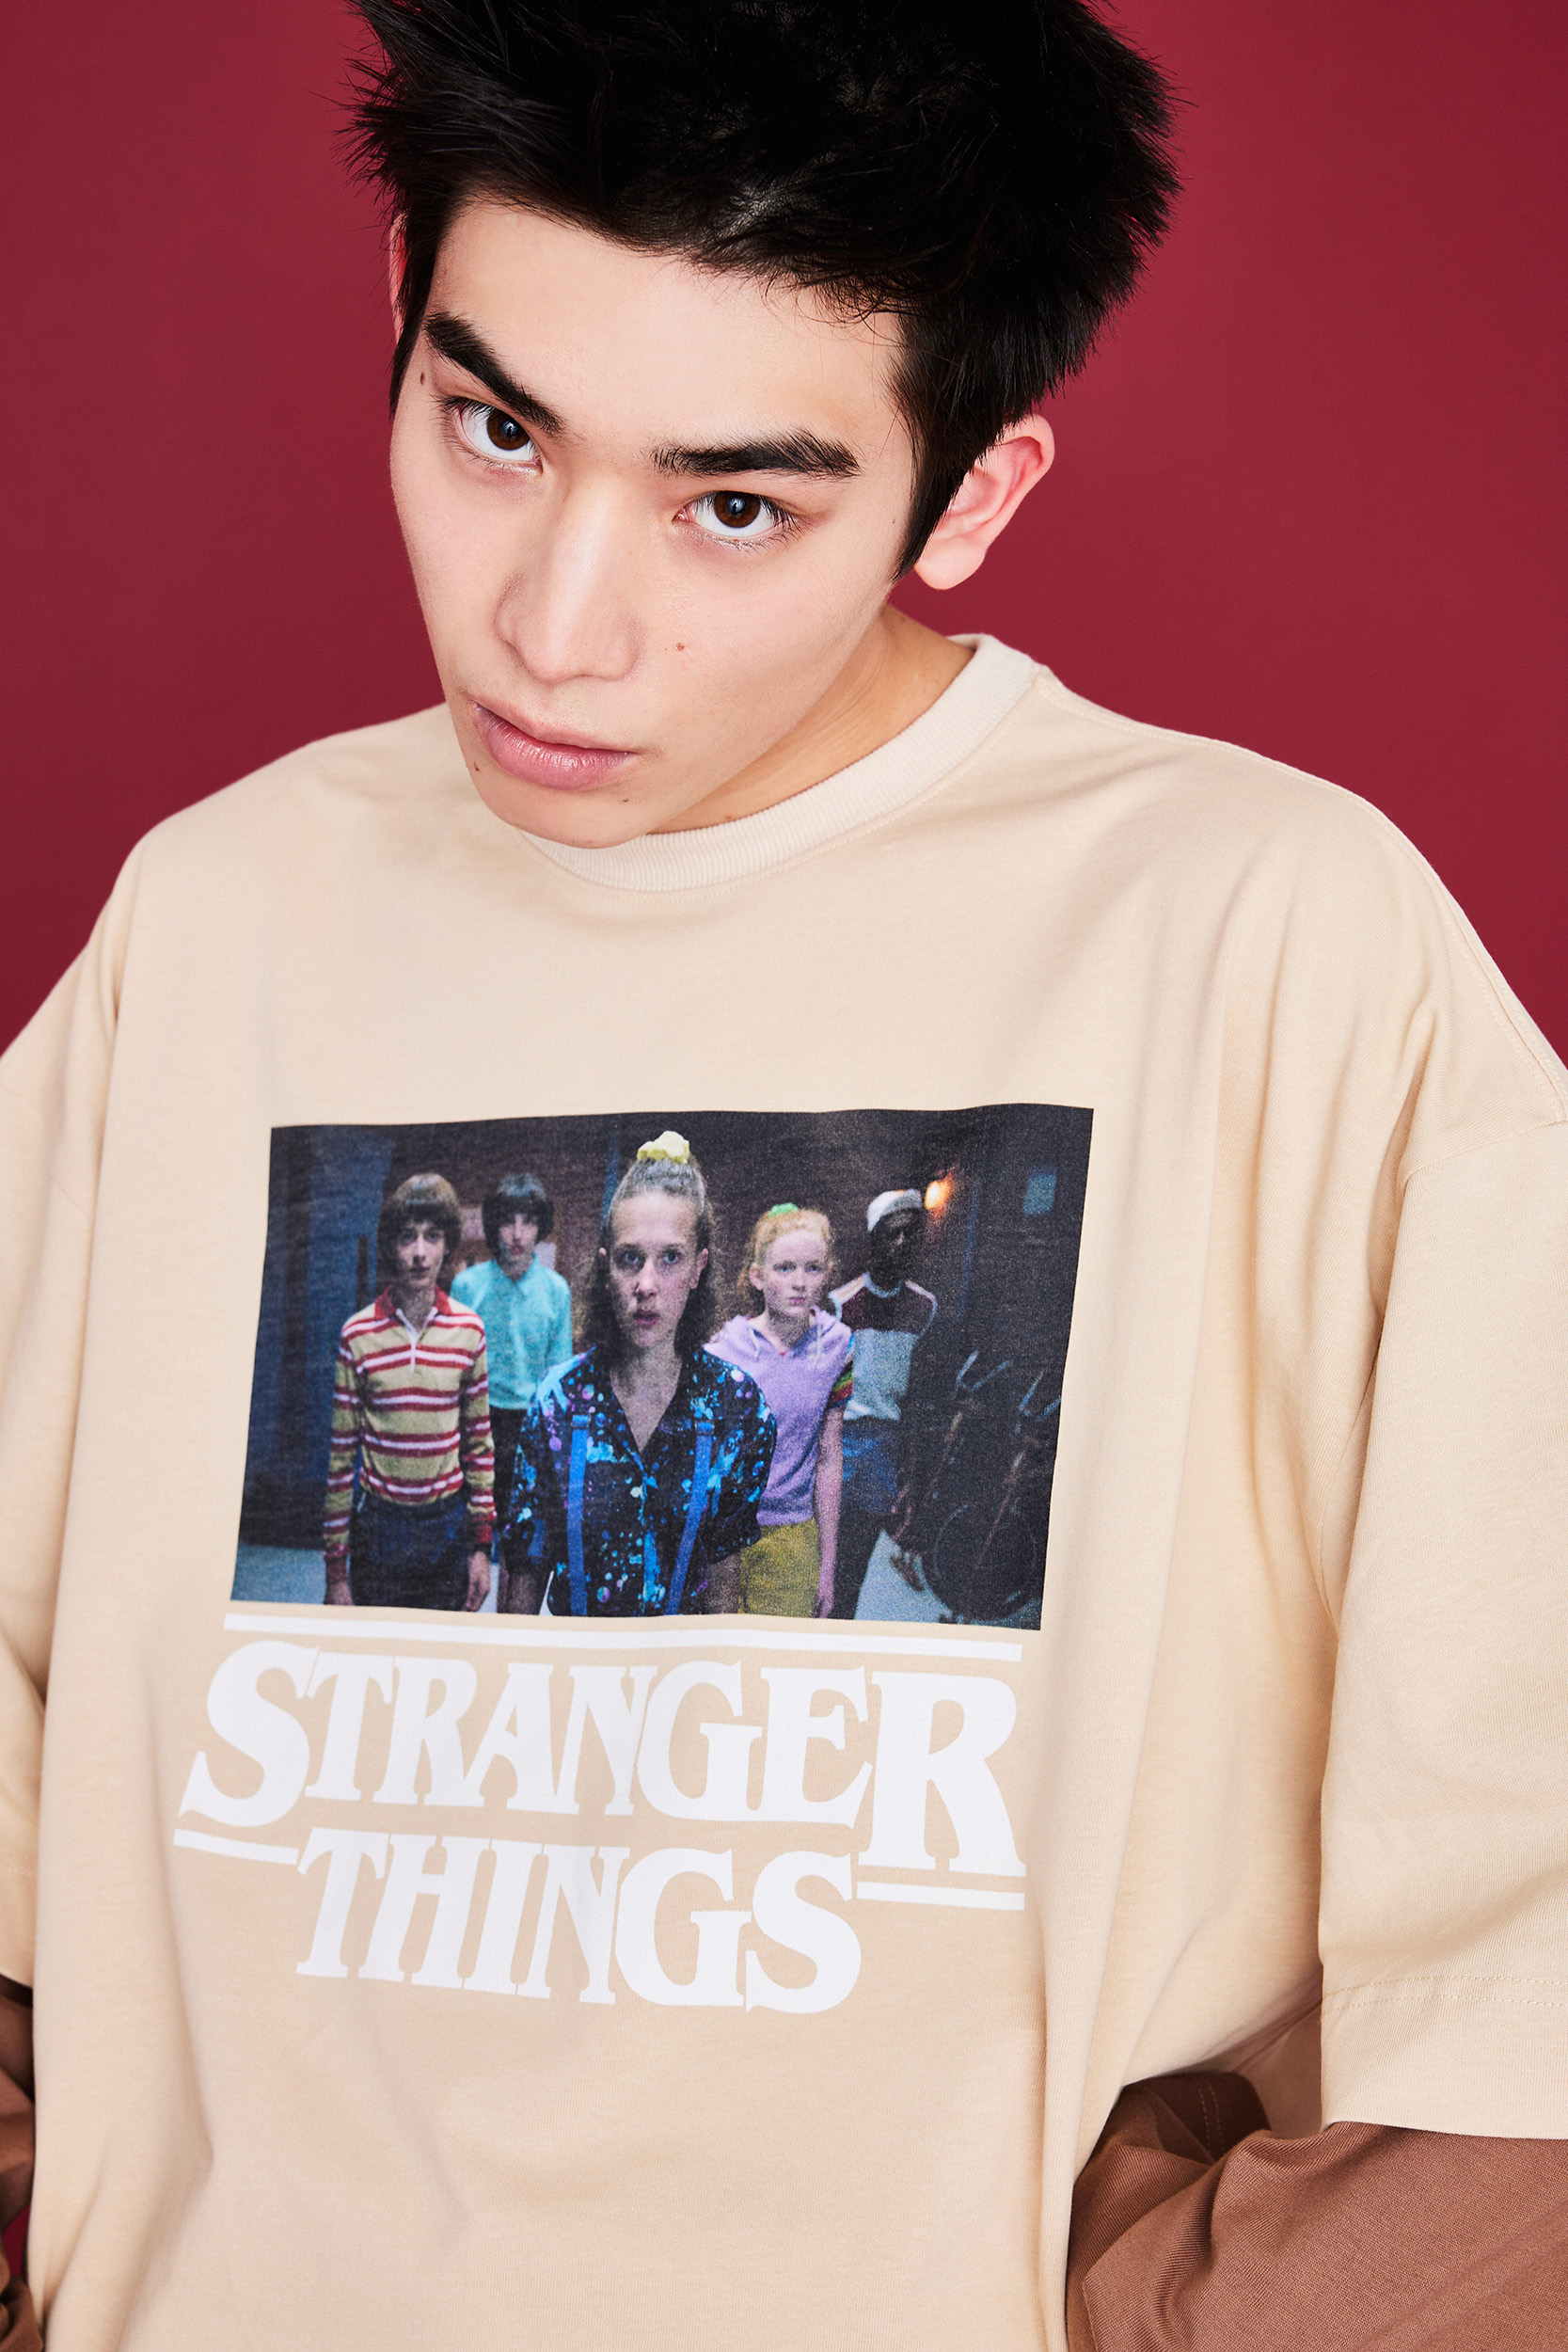 Little Sunny Bite x Stranger Things – Fashion Grunge